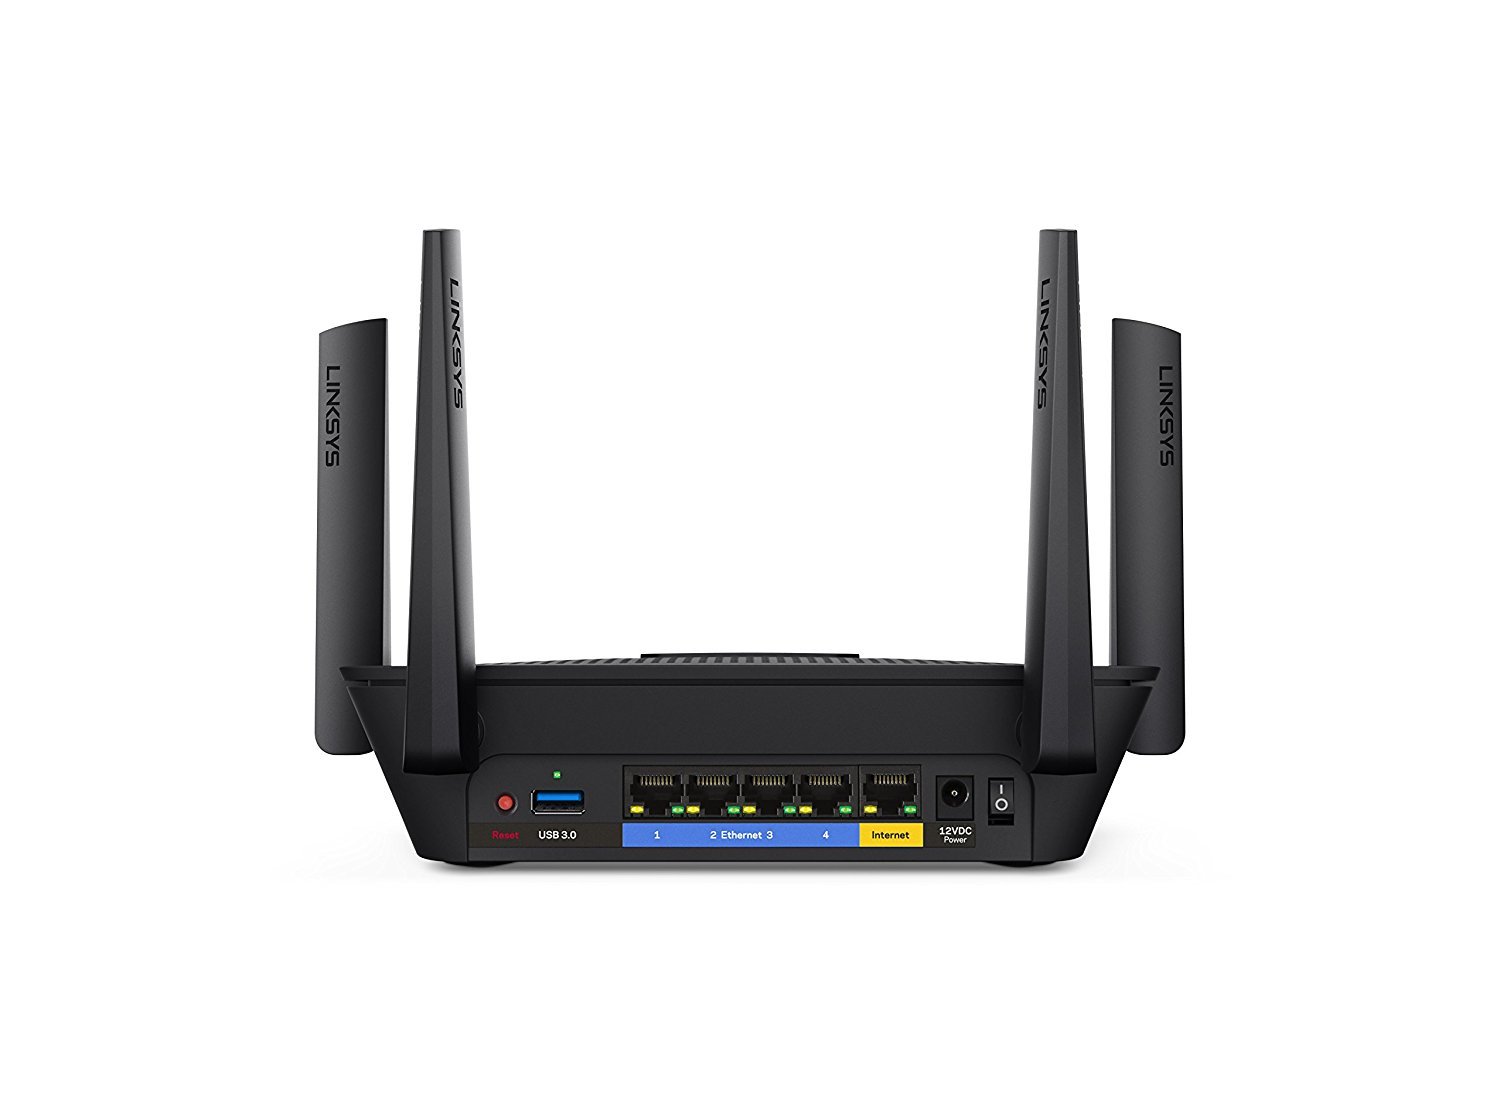 Linksys - Max-Stream AC2200 Tri-Band Wi-Fi Router (EA8300) Black - New (Renewed)